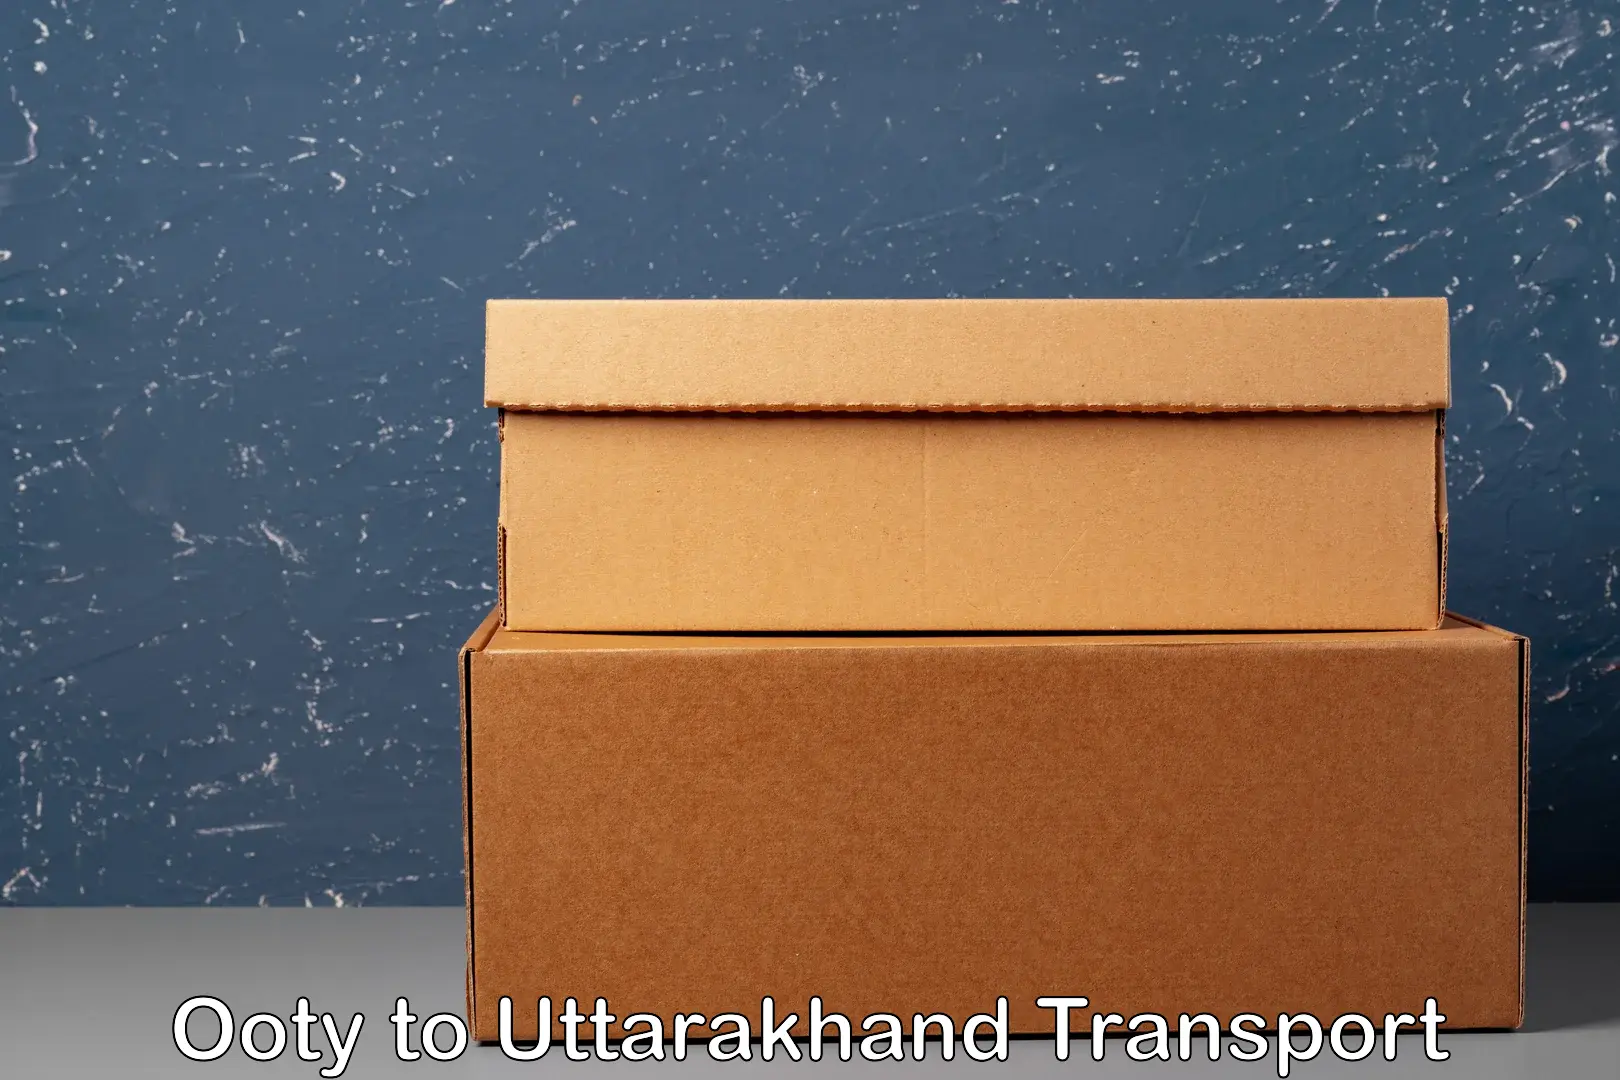 Cycle transportation service Ooty to Uttarakhand